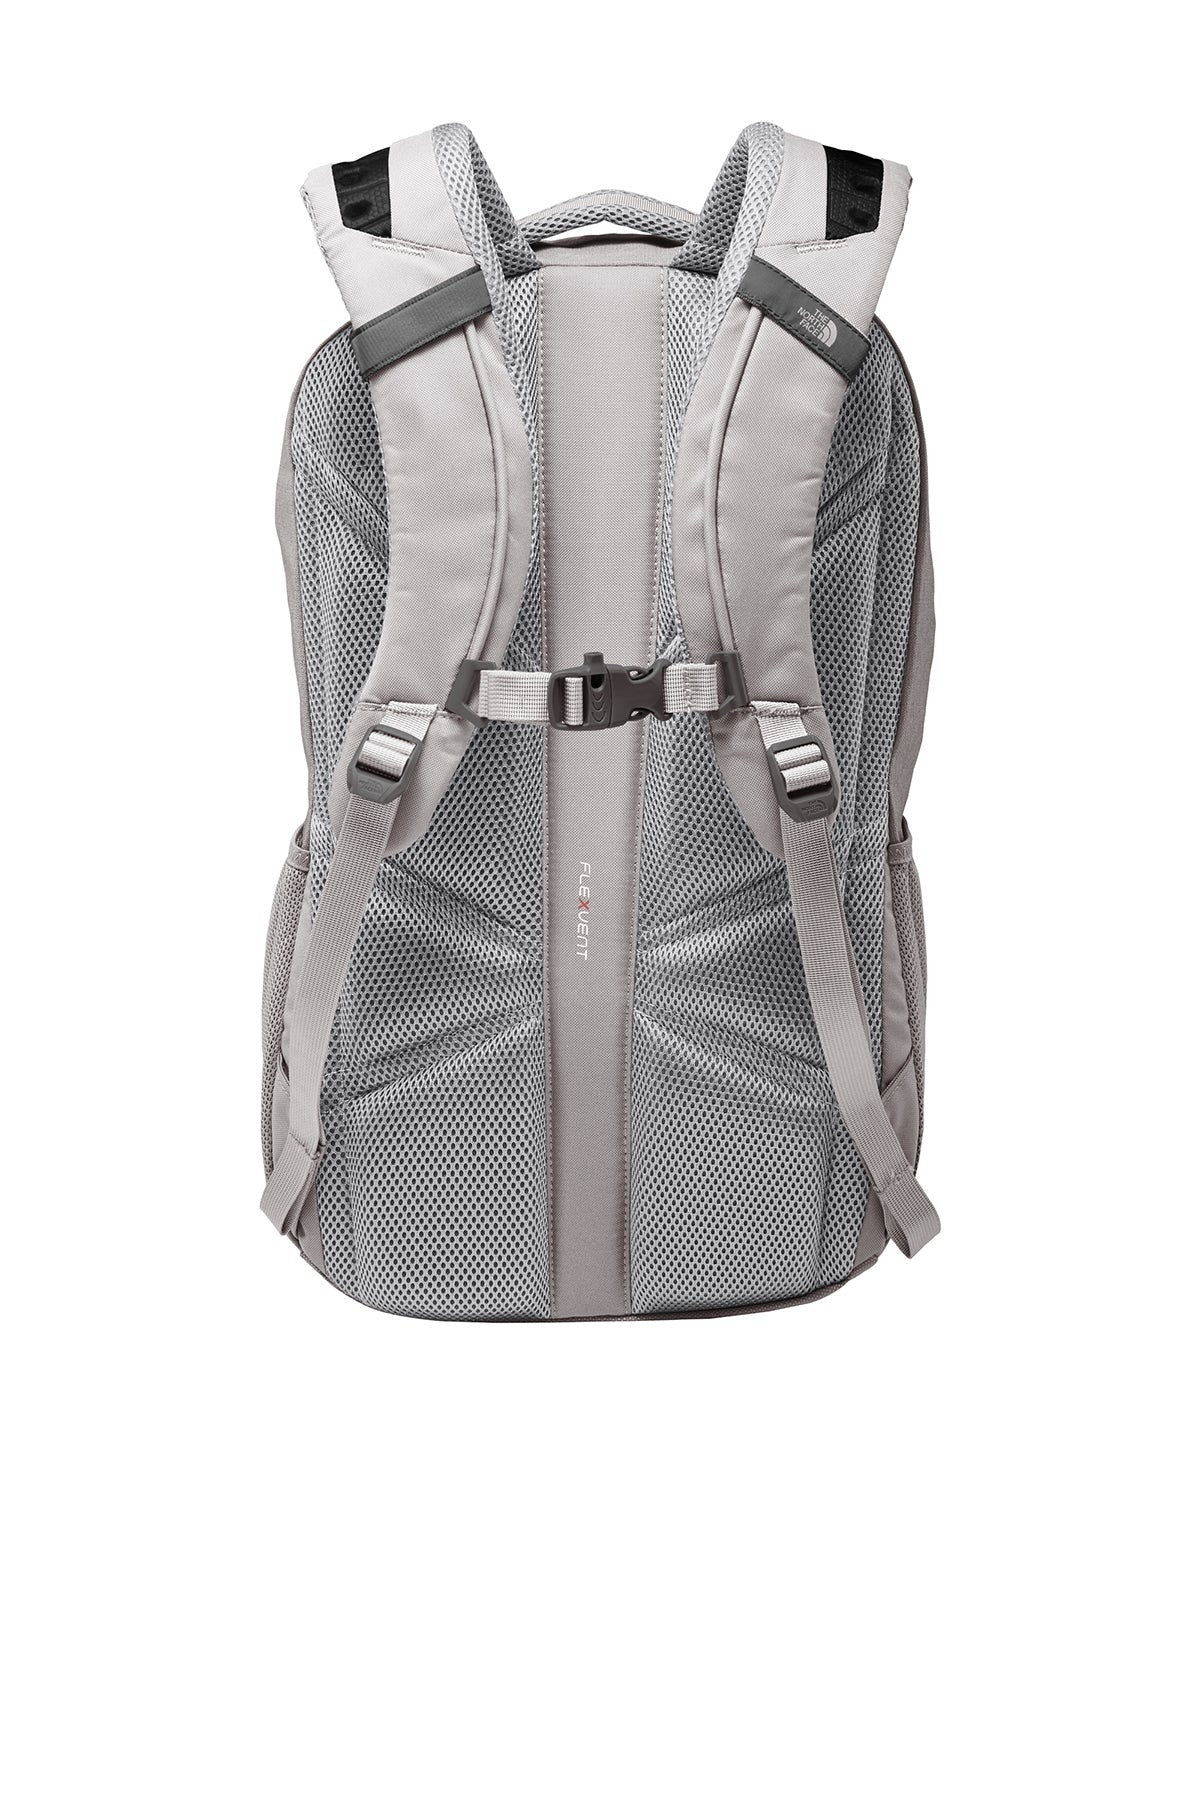 North Face Connector Backpack Mid Grey Dark Heather/ Mid Grey